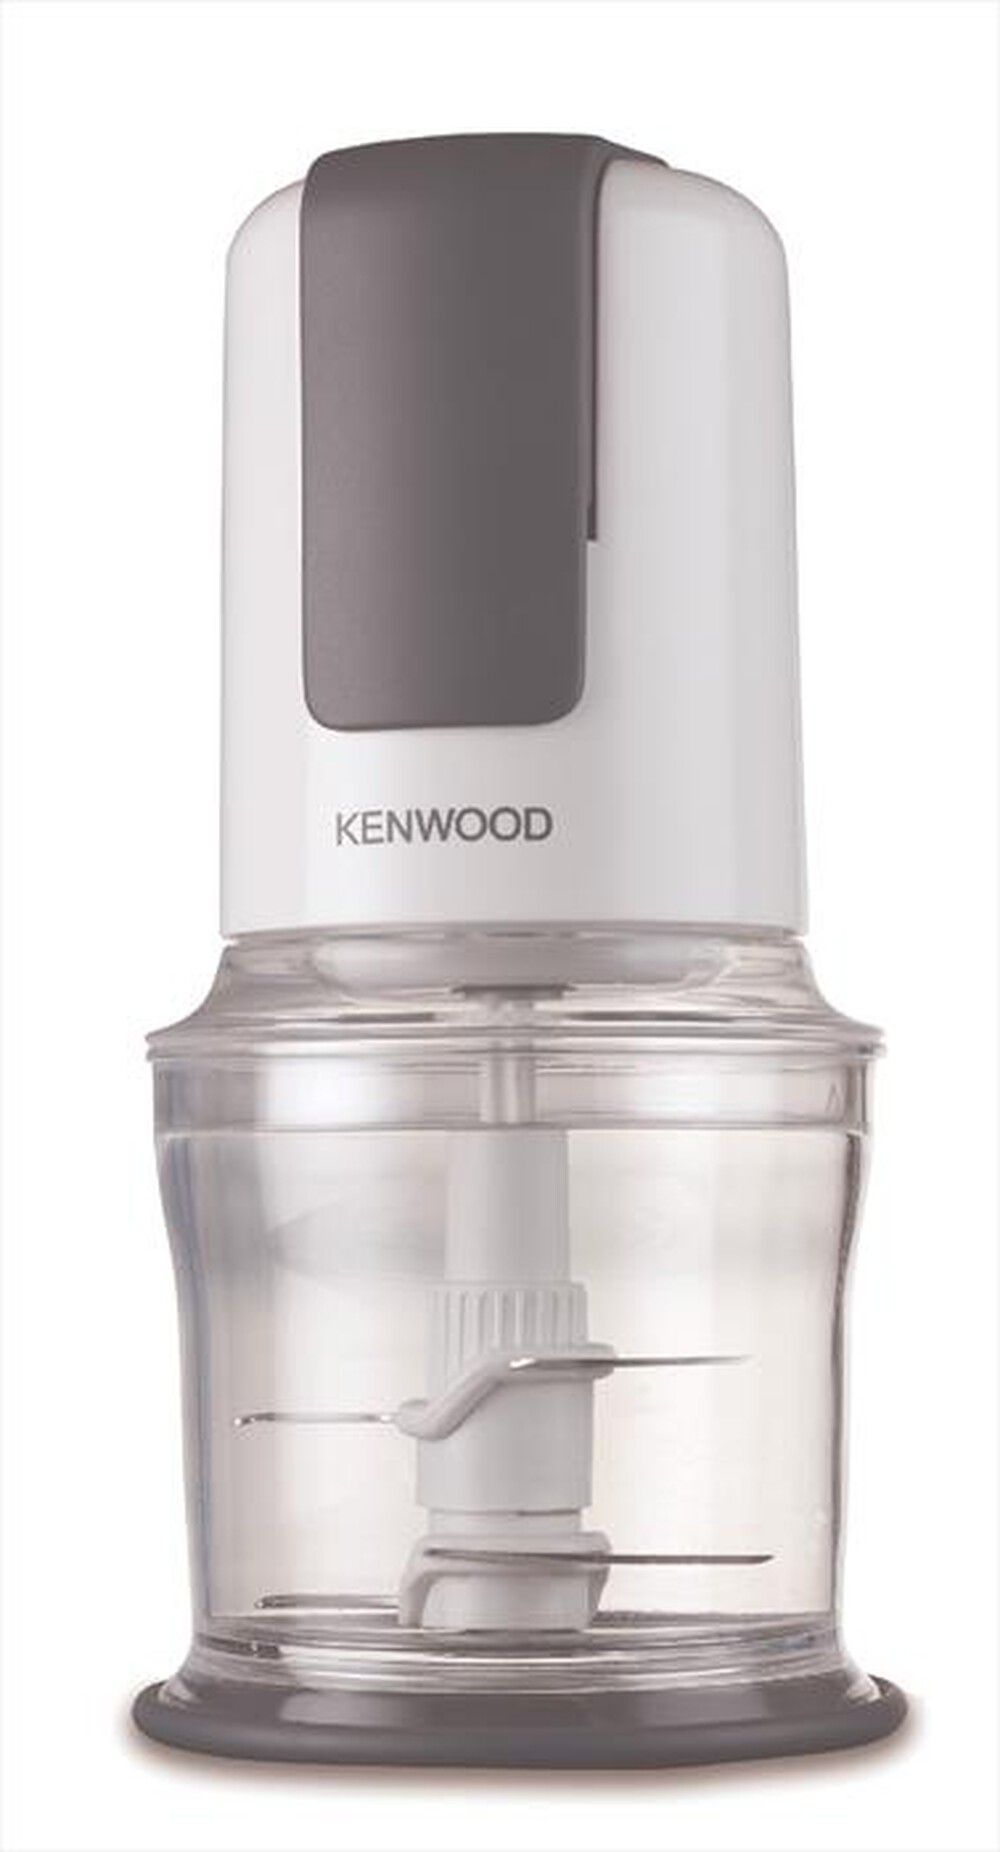 "KENWOOD. - CH 580-Bianco"